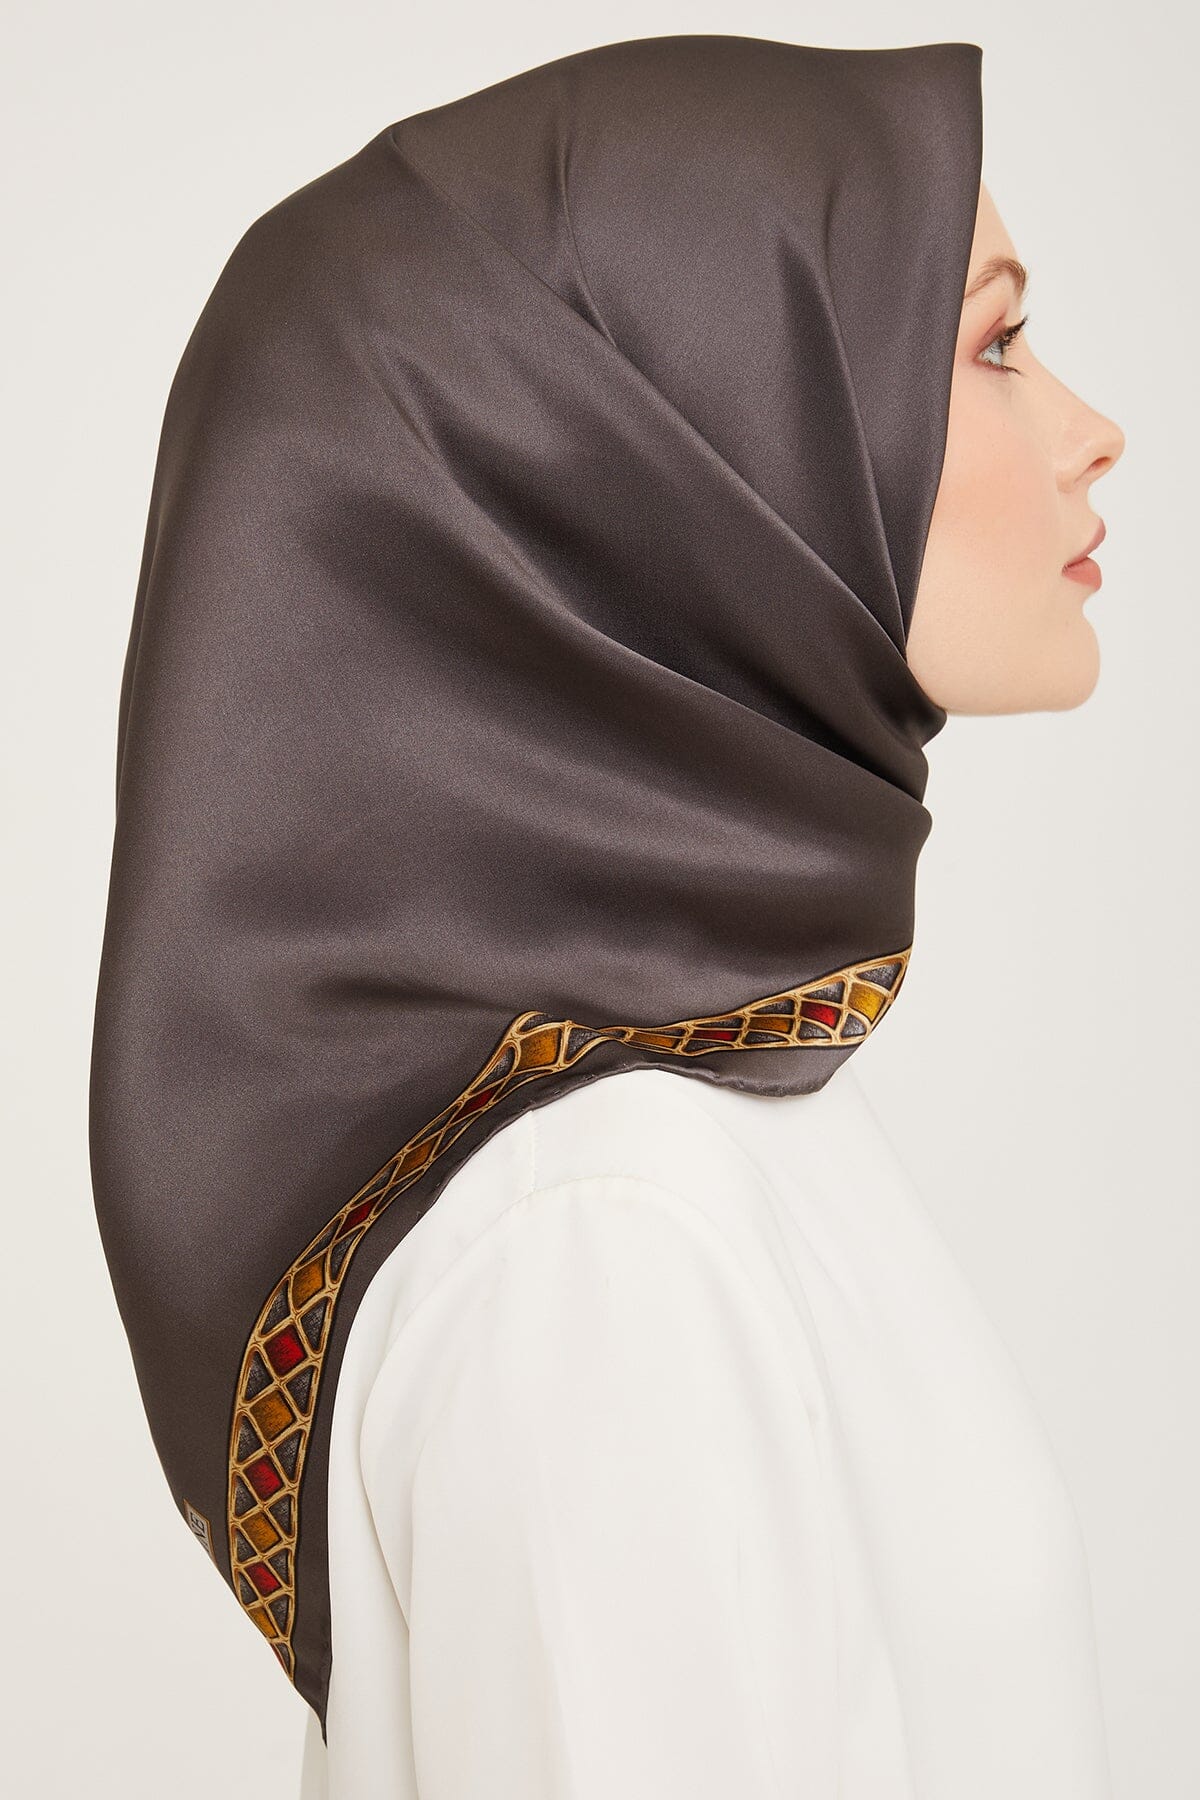 Armine Belle Classy Silk Scarf #35 Silk Hijabs,Armine Armine 